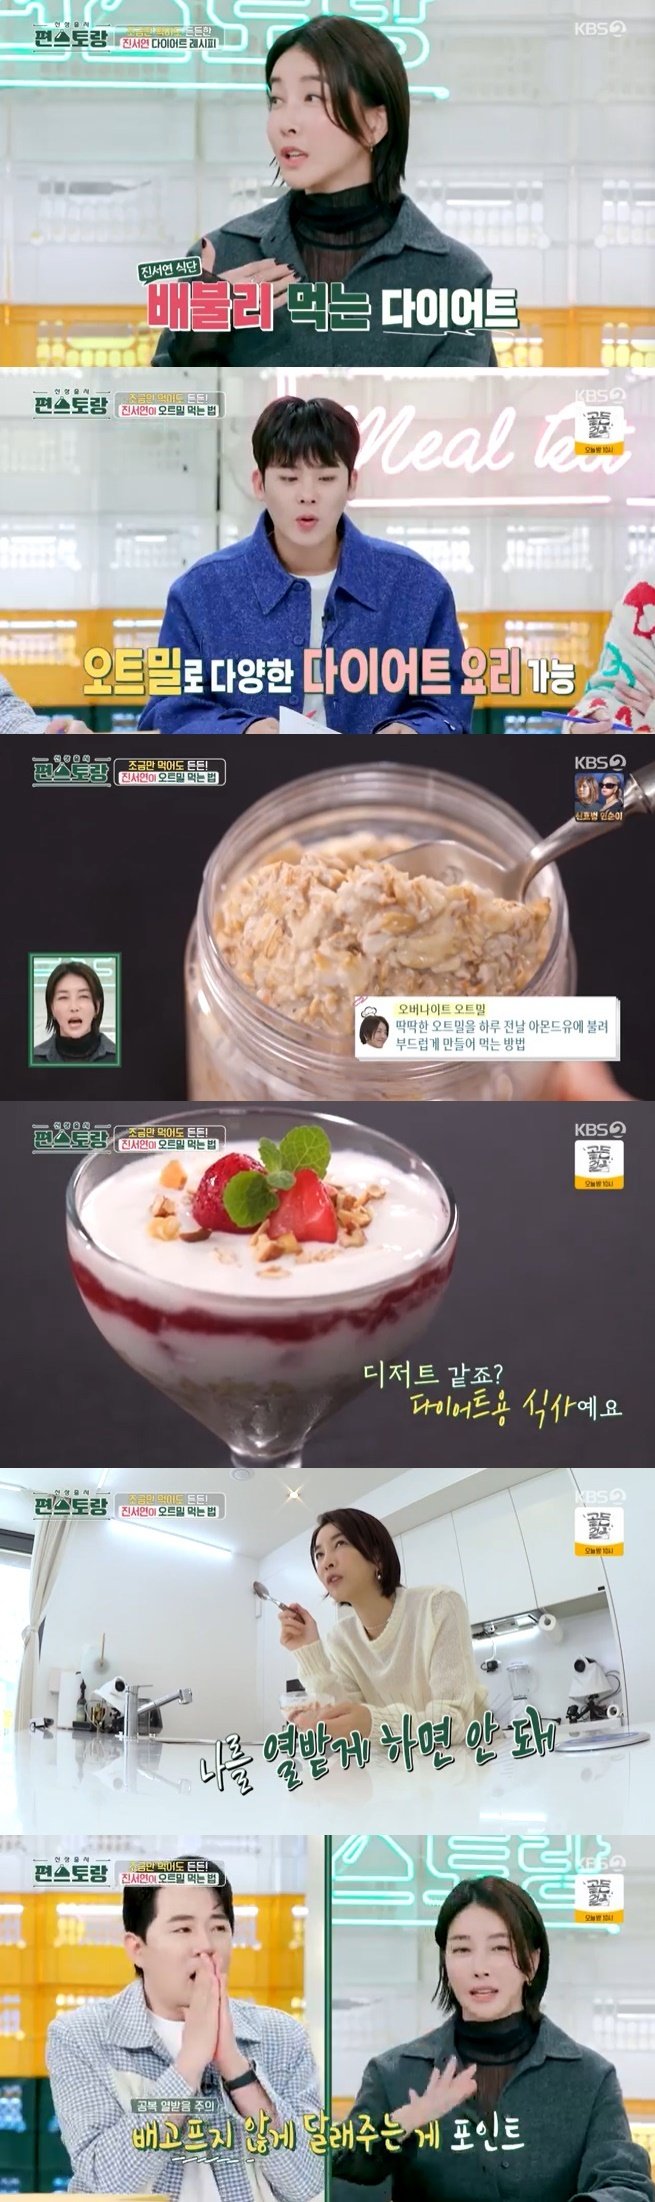 KBS 2TV '신상출시 편스토랑' 캡처